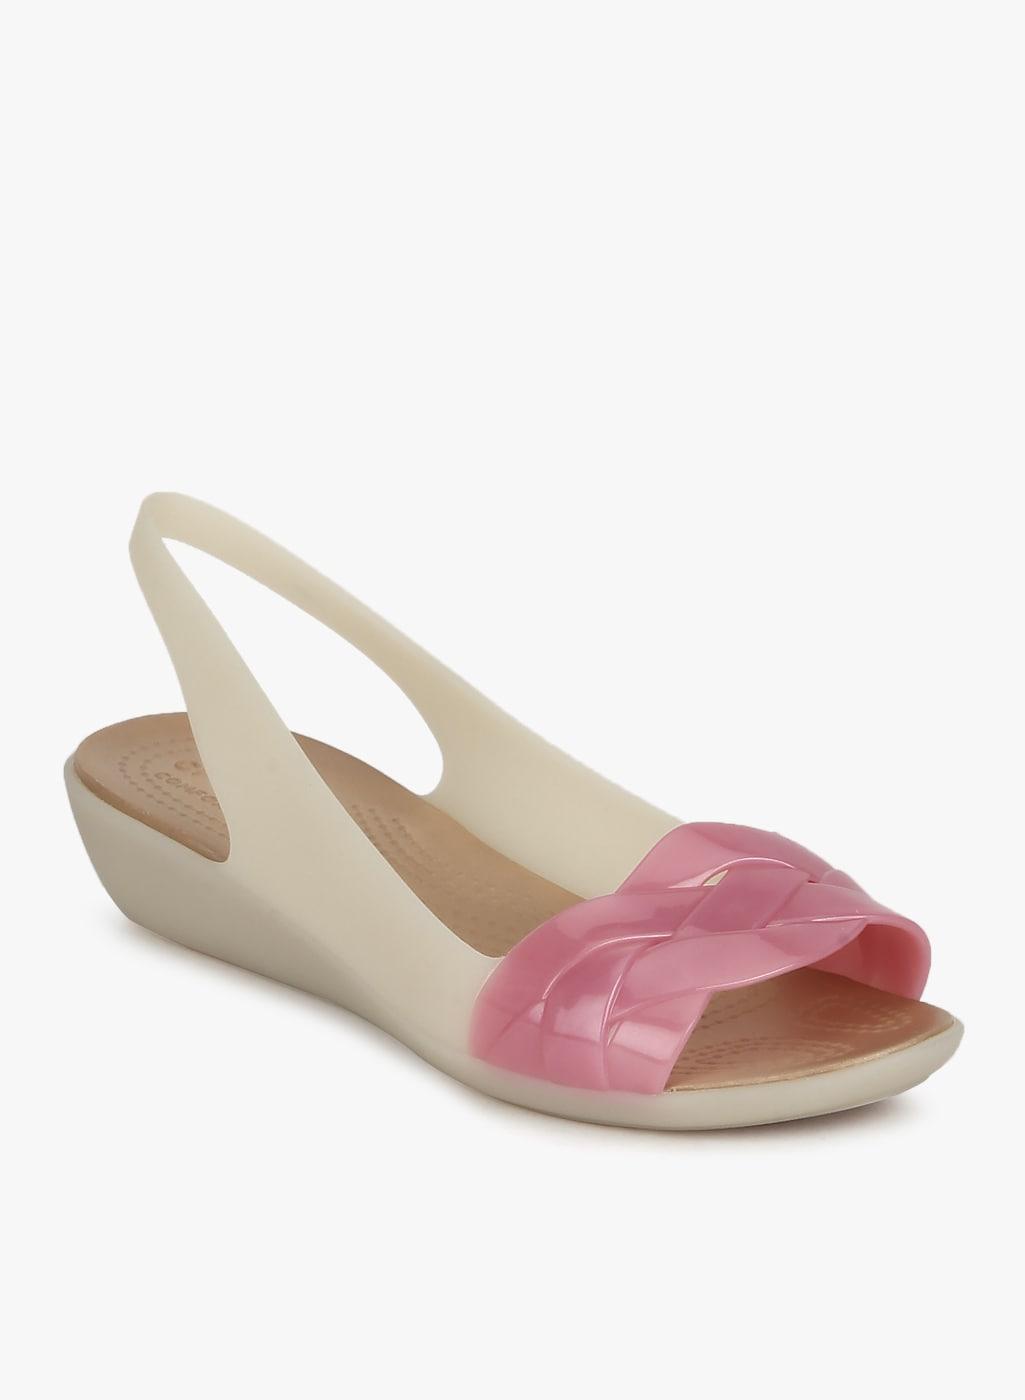 crocs-women-off-white-&-pink-colourblocked-open-toe-flats